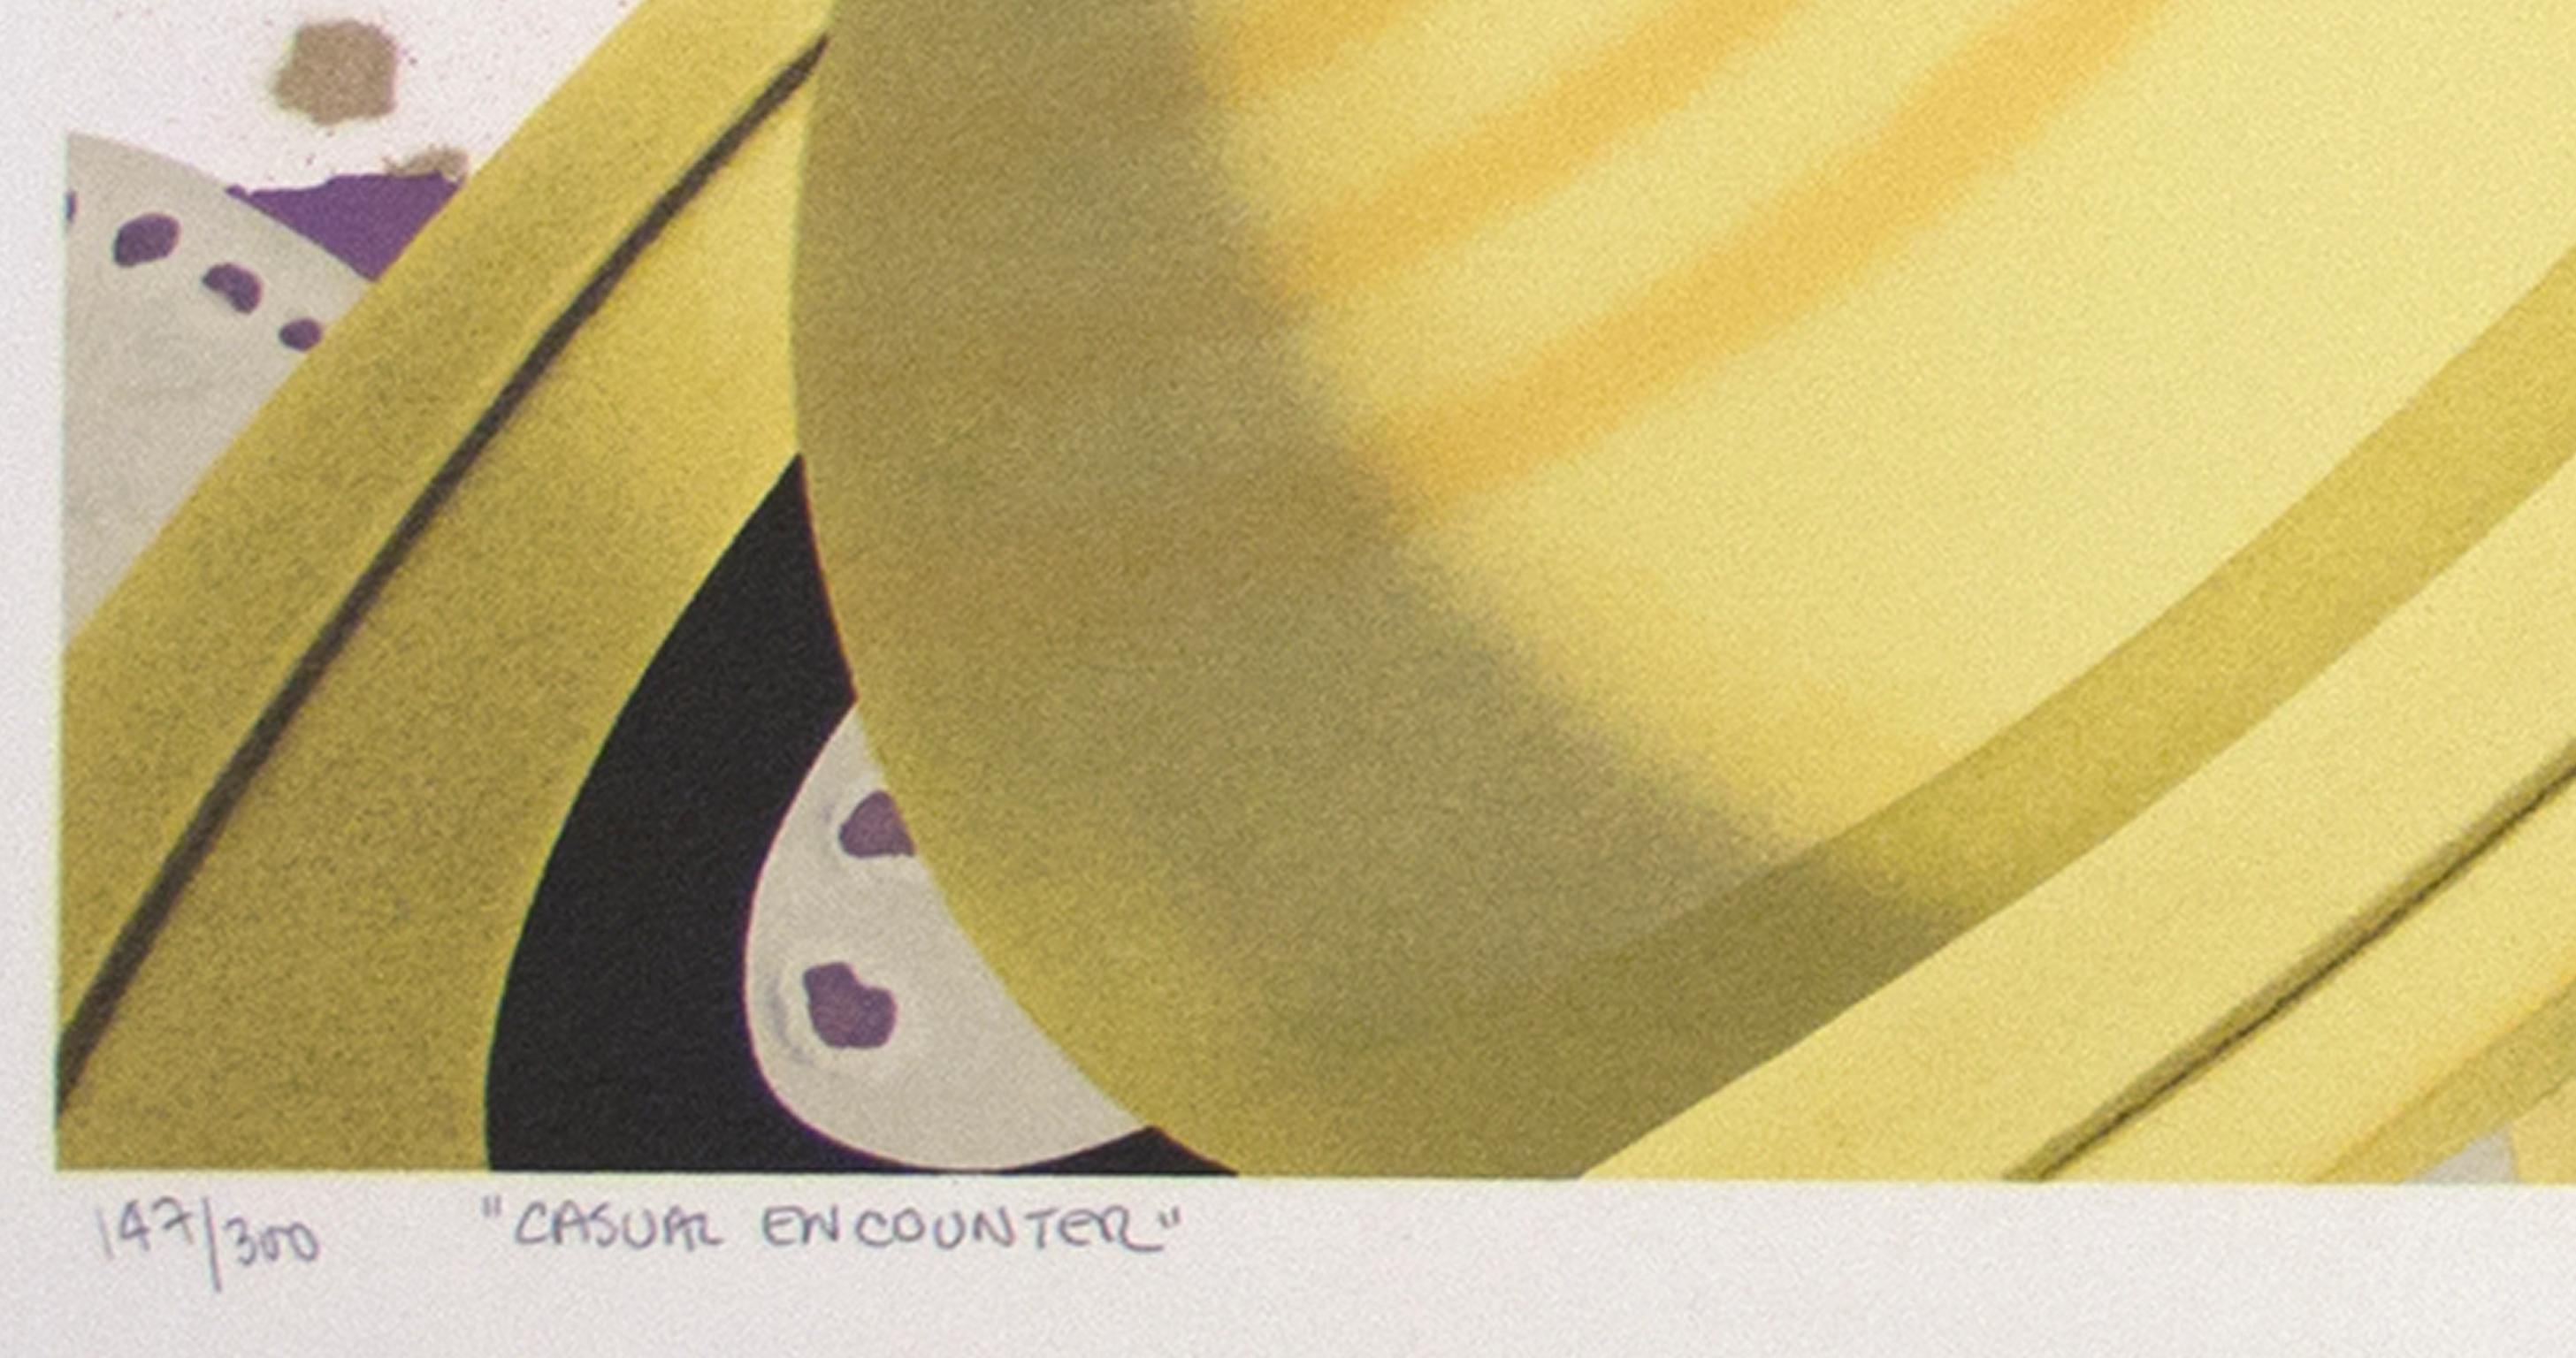 «sual Encounter », lithographie originale signée de la galaxie abstraite brillante, amusante et vibrante - Print de Michael Knigin